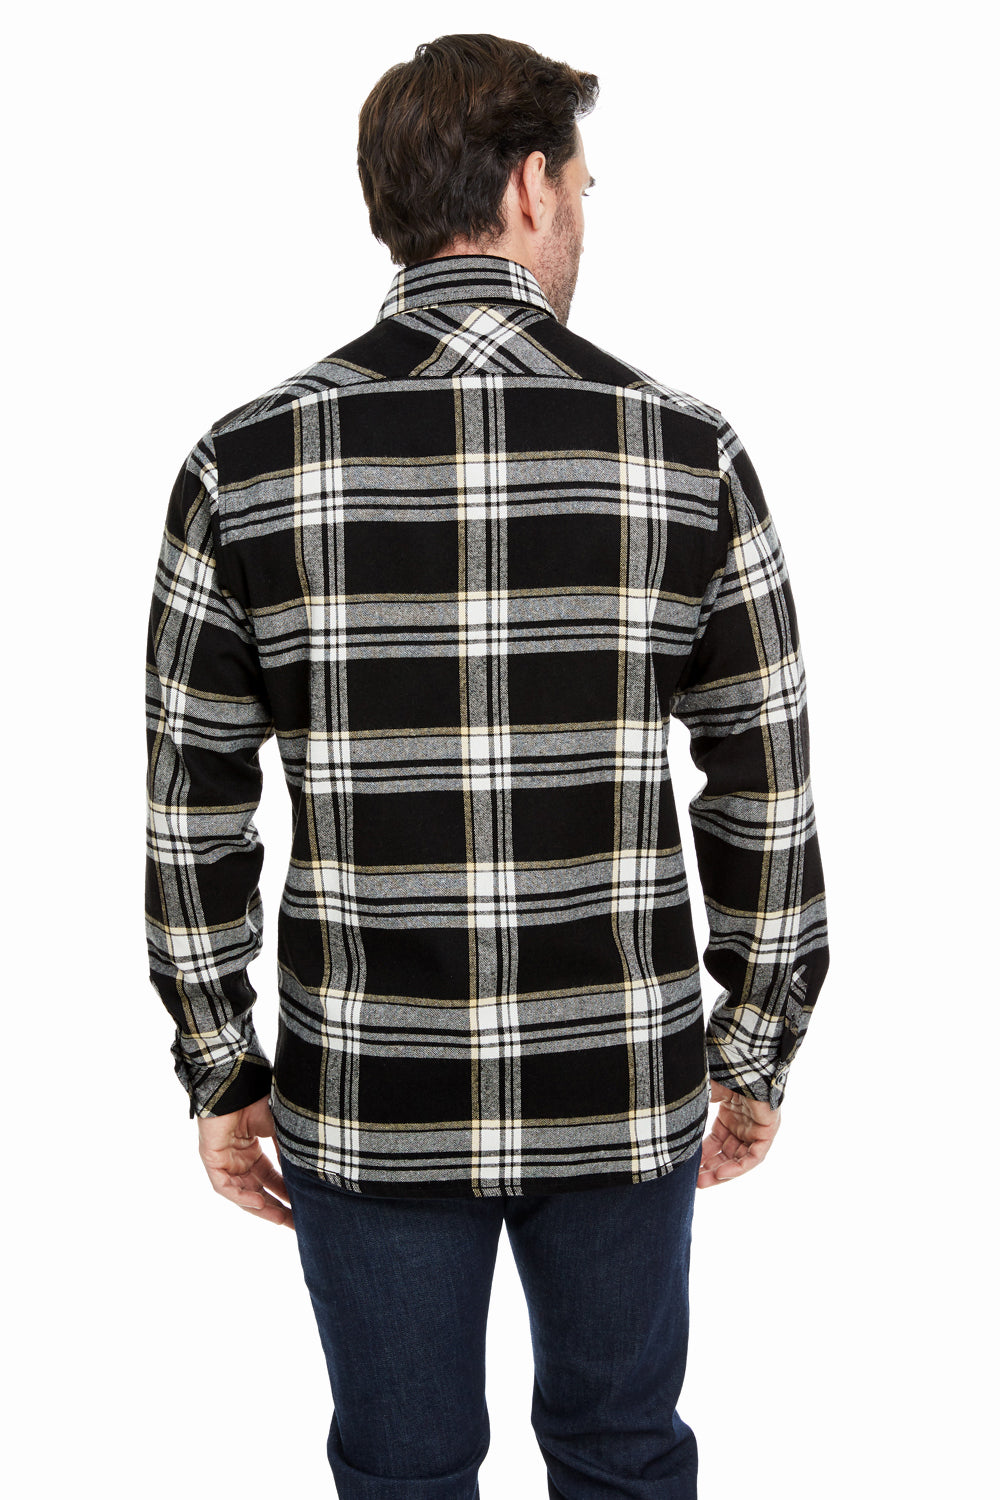 Burnside B8212 Mens Flannel Long Sleeve Button Down Shirt w/ Pocket Black/Ecru Model Back